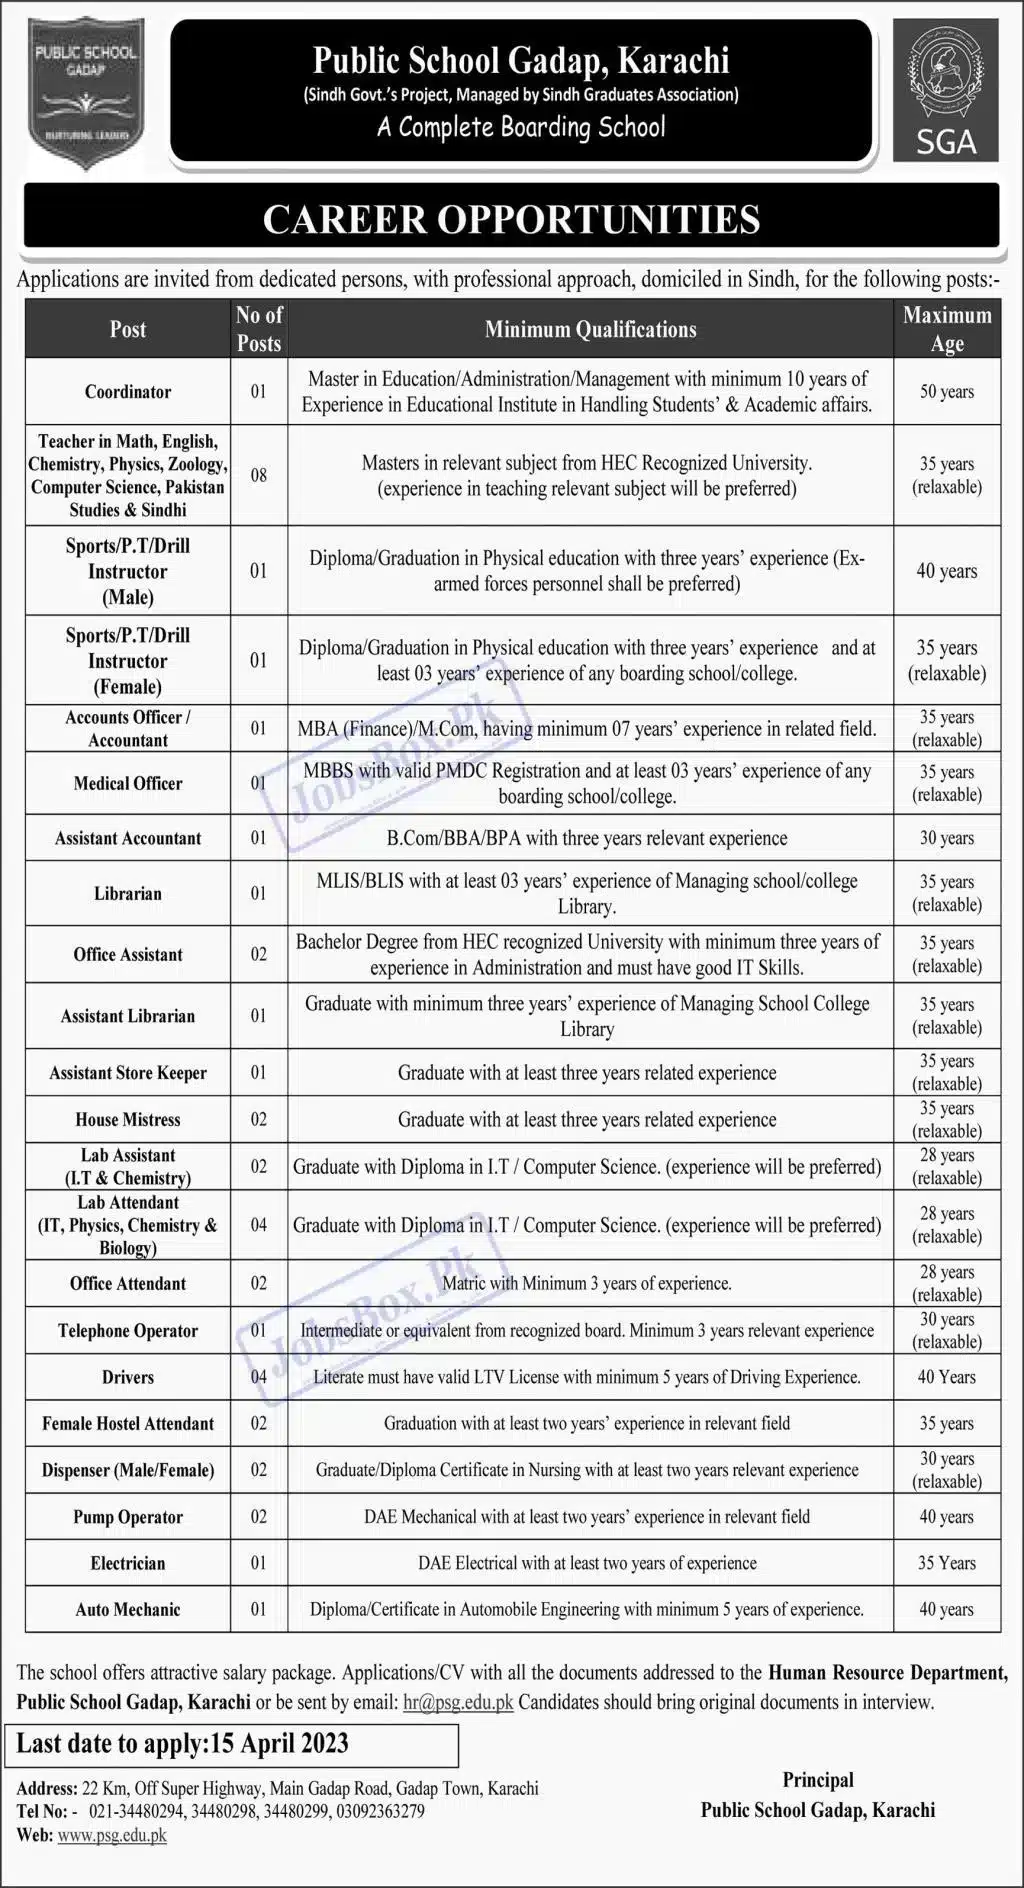 Public School Gadap Karachi Jobs 2023 – www.psg.edu.pk